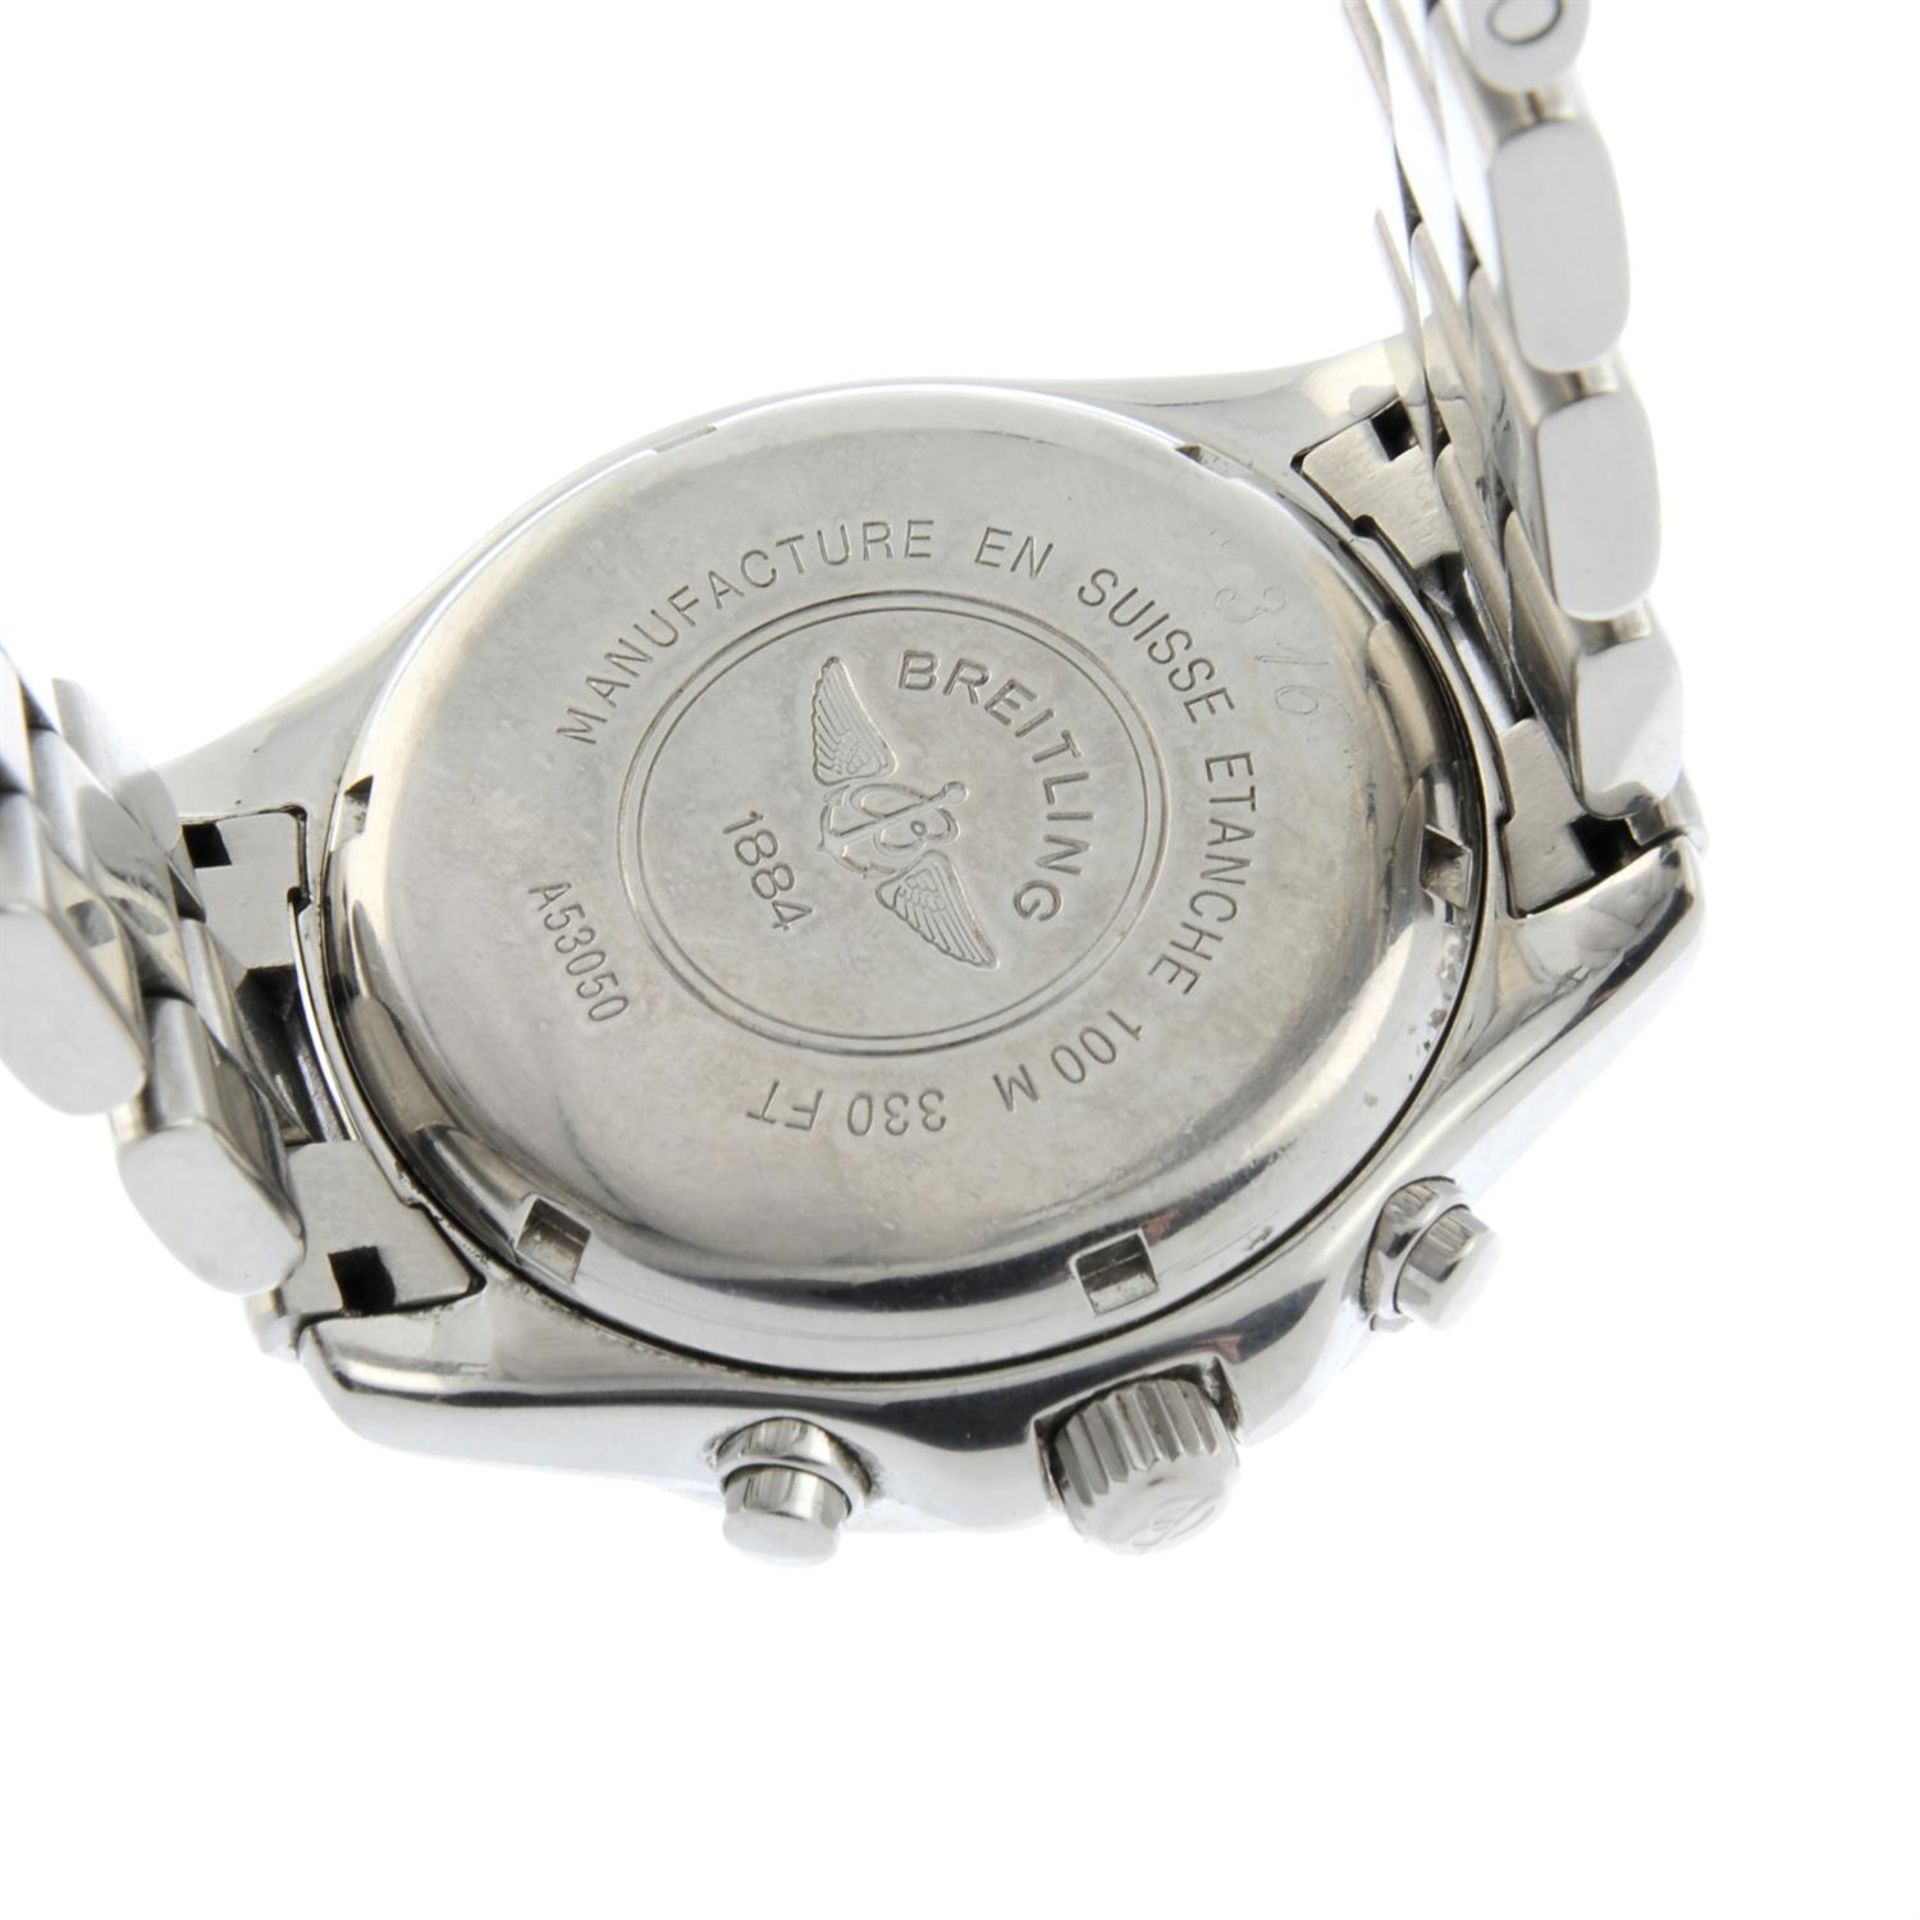 BREITLING - a stainless steel Colt Quartz Ocean chronograph bracelet watch, 38mm. - Image 4 of 5